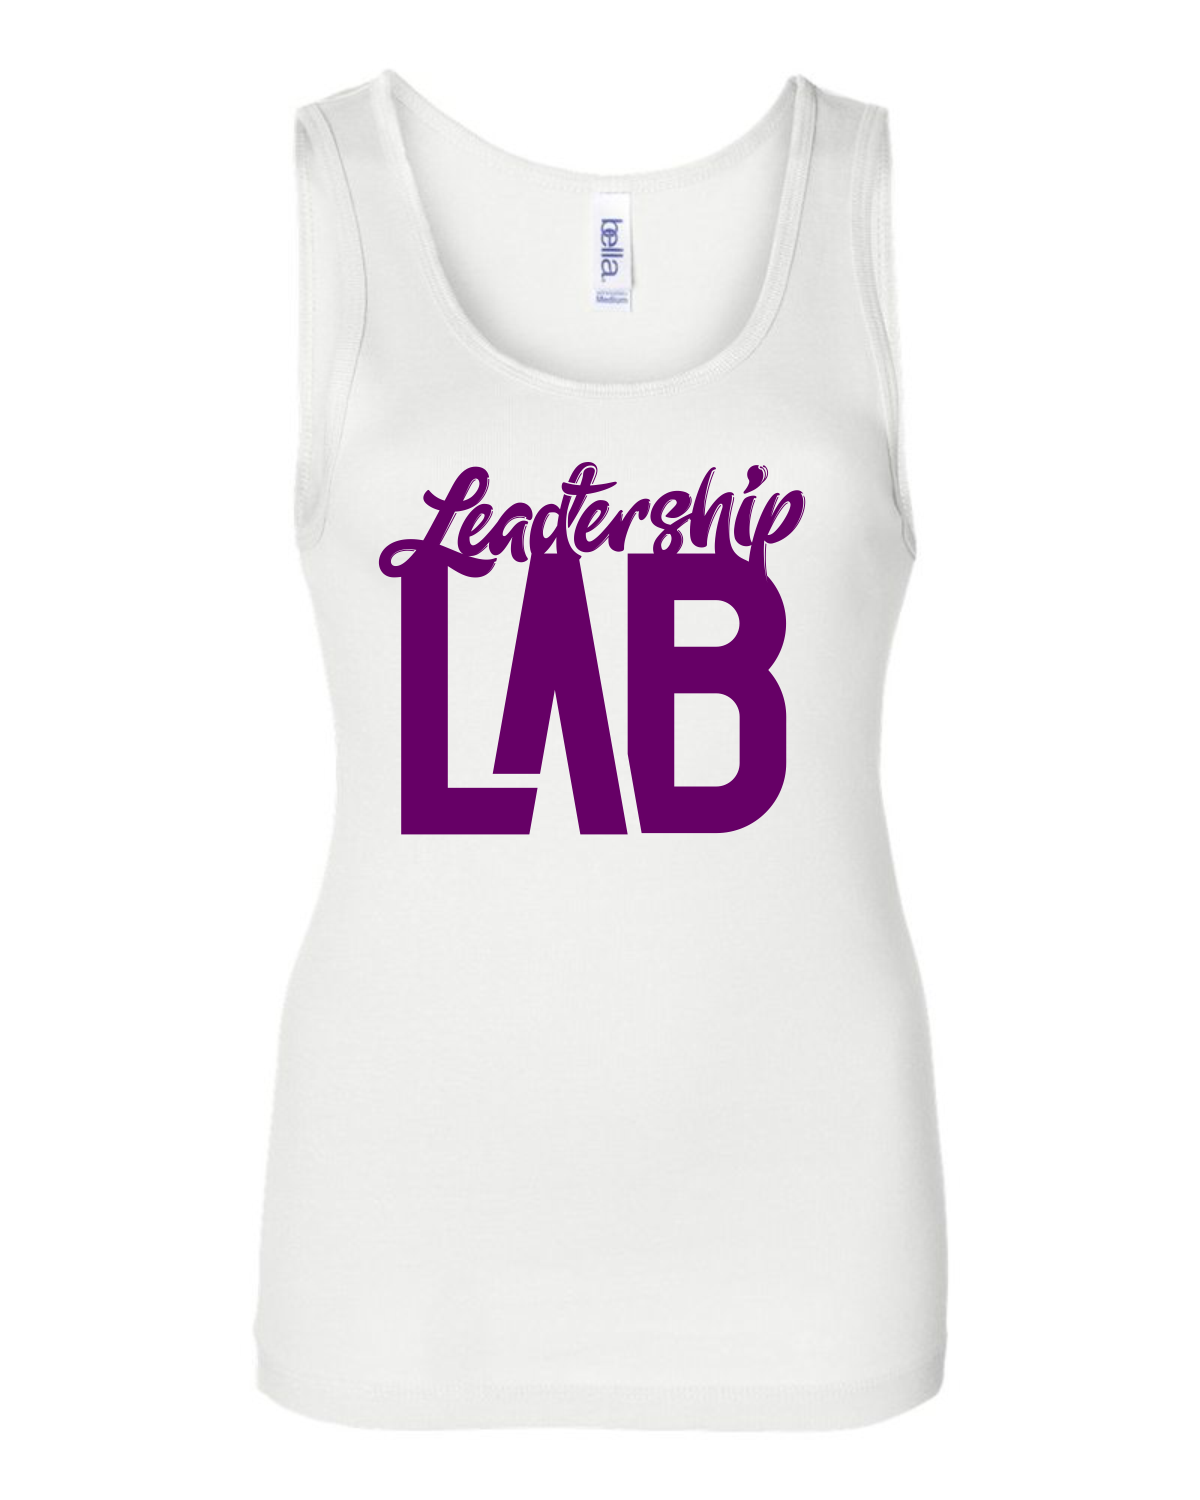 Leadership Lab White Tank